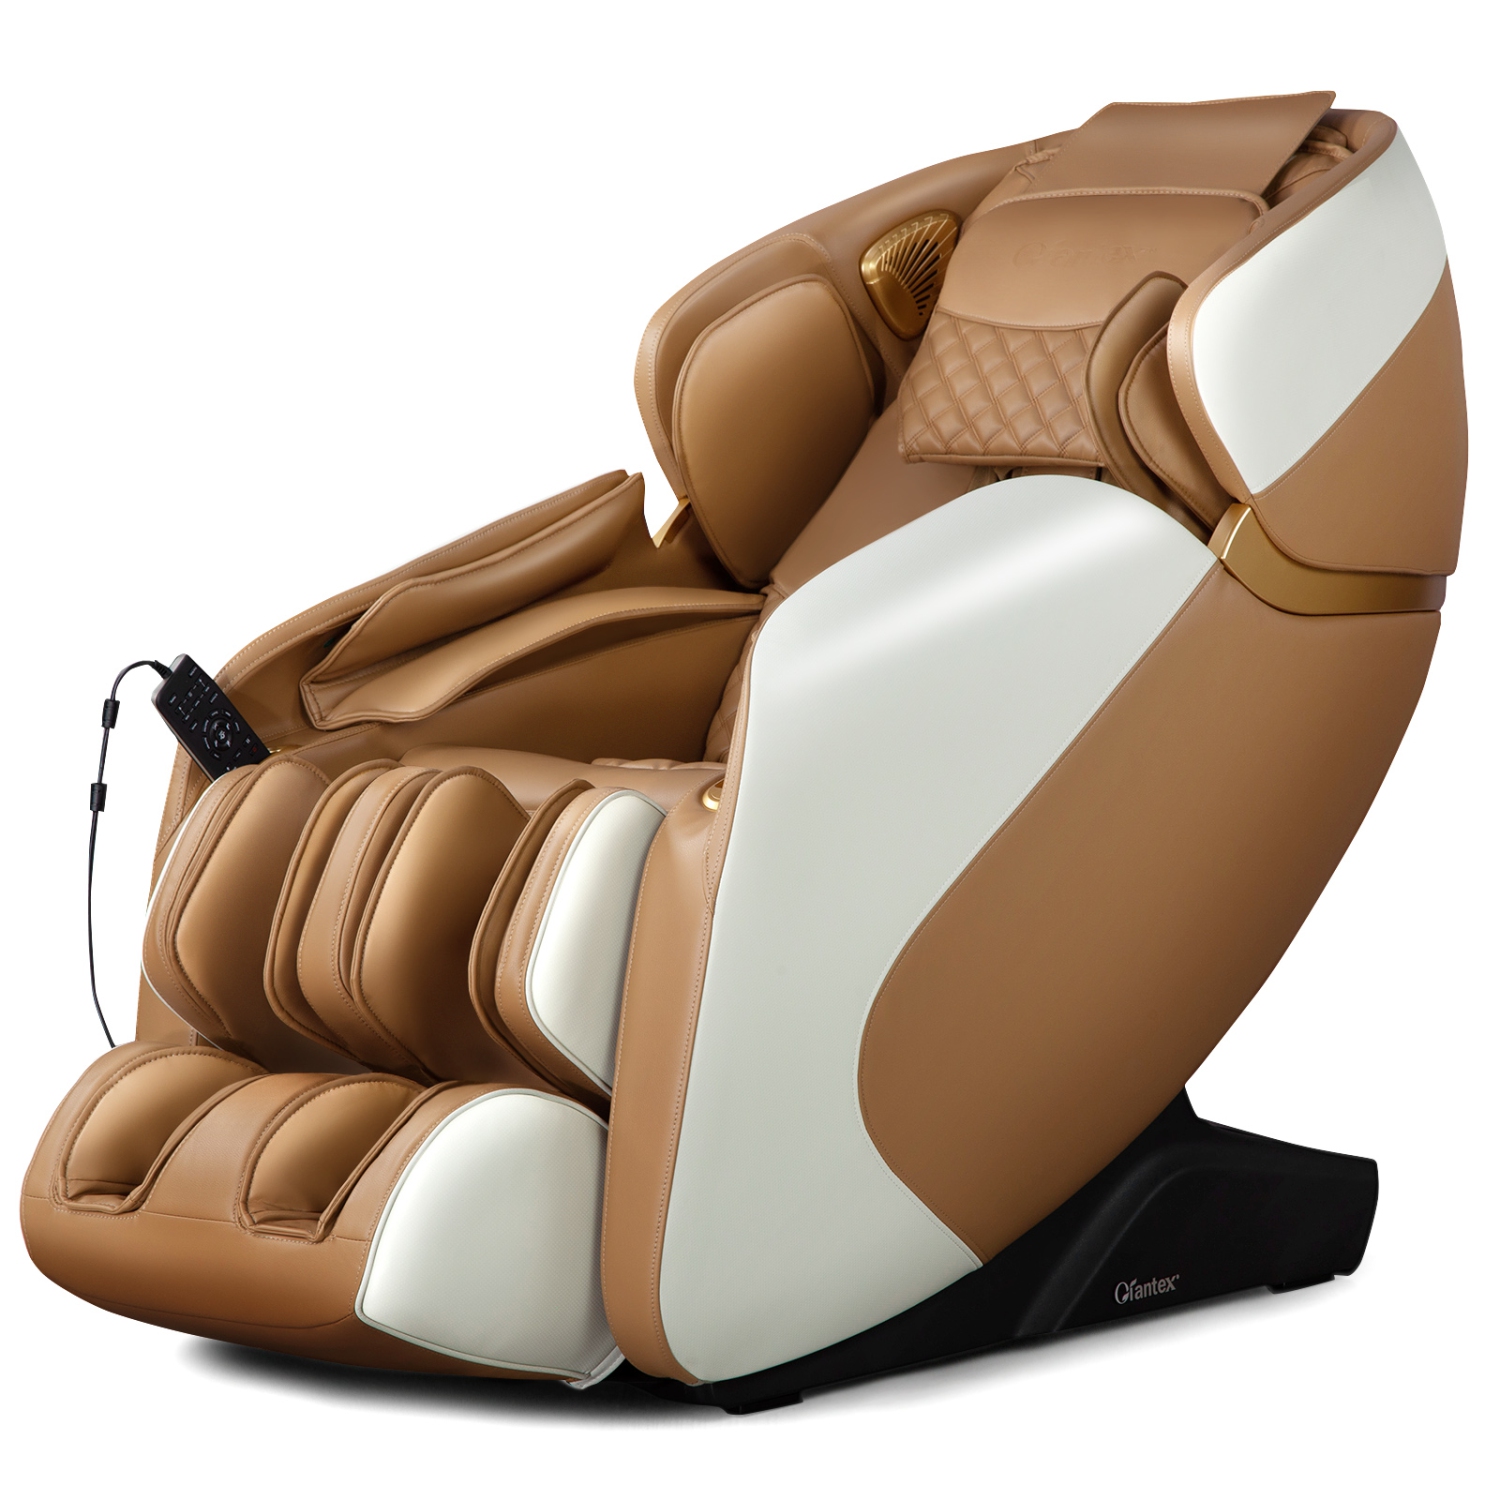 Costway Full Body Massage Chair (JL10003WL) Zero Gravity Shiatsu Massage Recliner with SL Track Intelligent Voice Control Home&Office